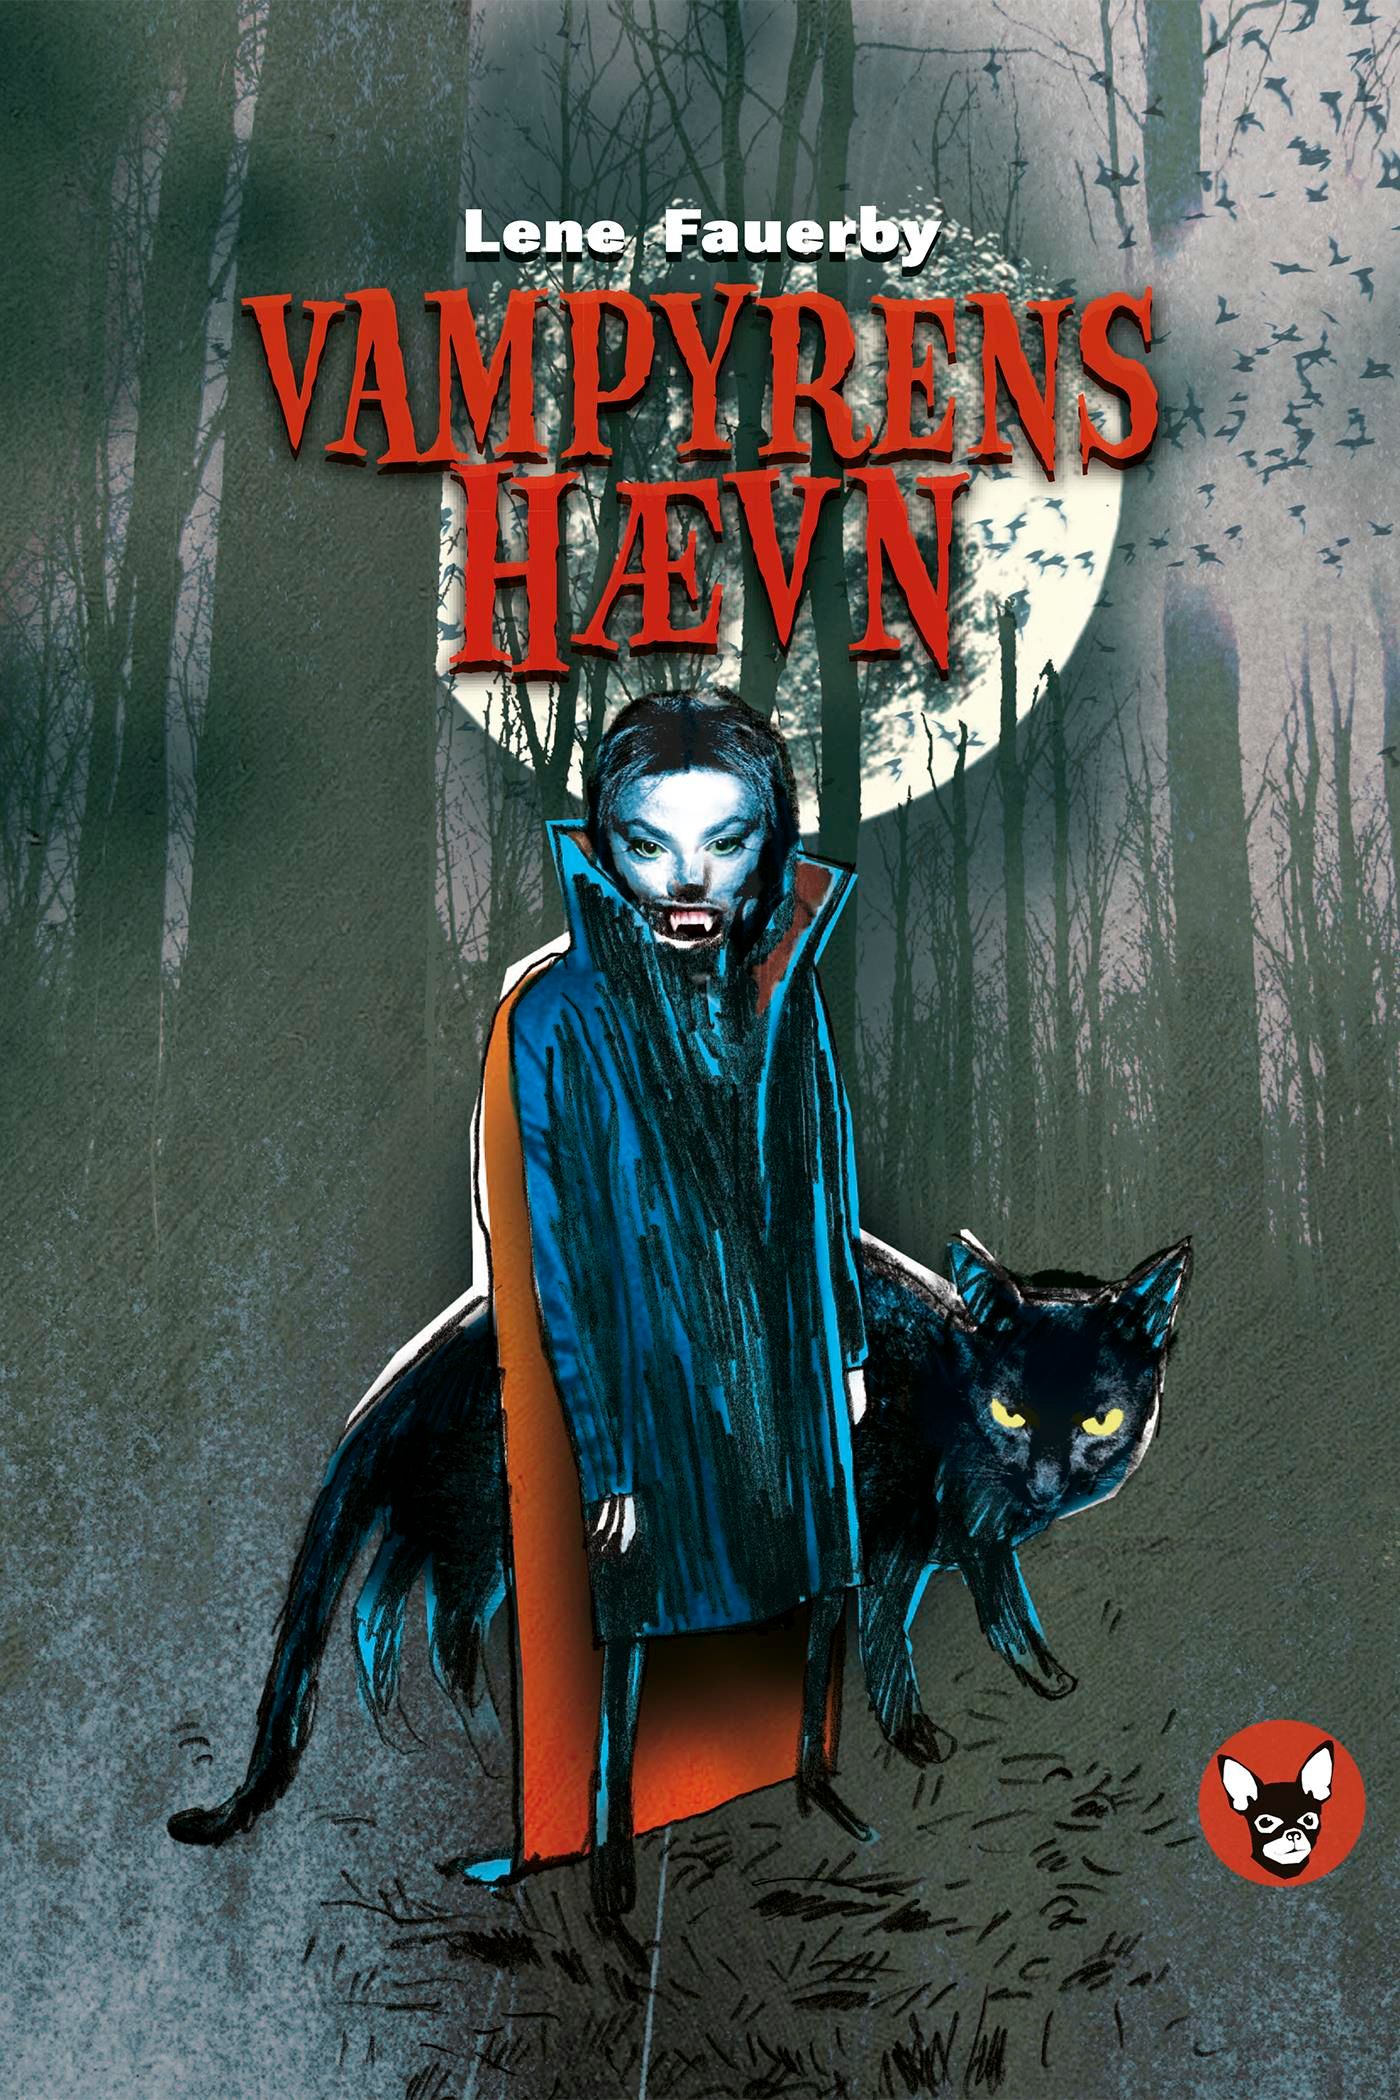 Vampyrens hævn, eBook by Lene Fauerby